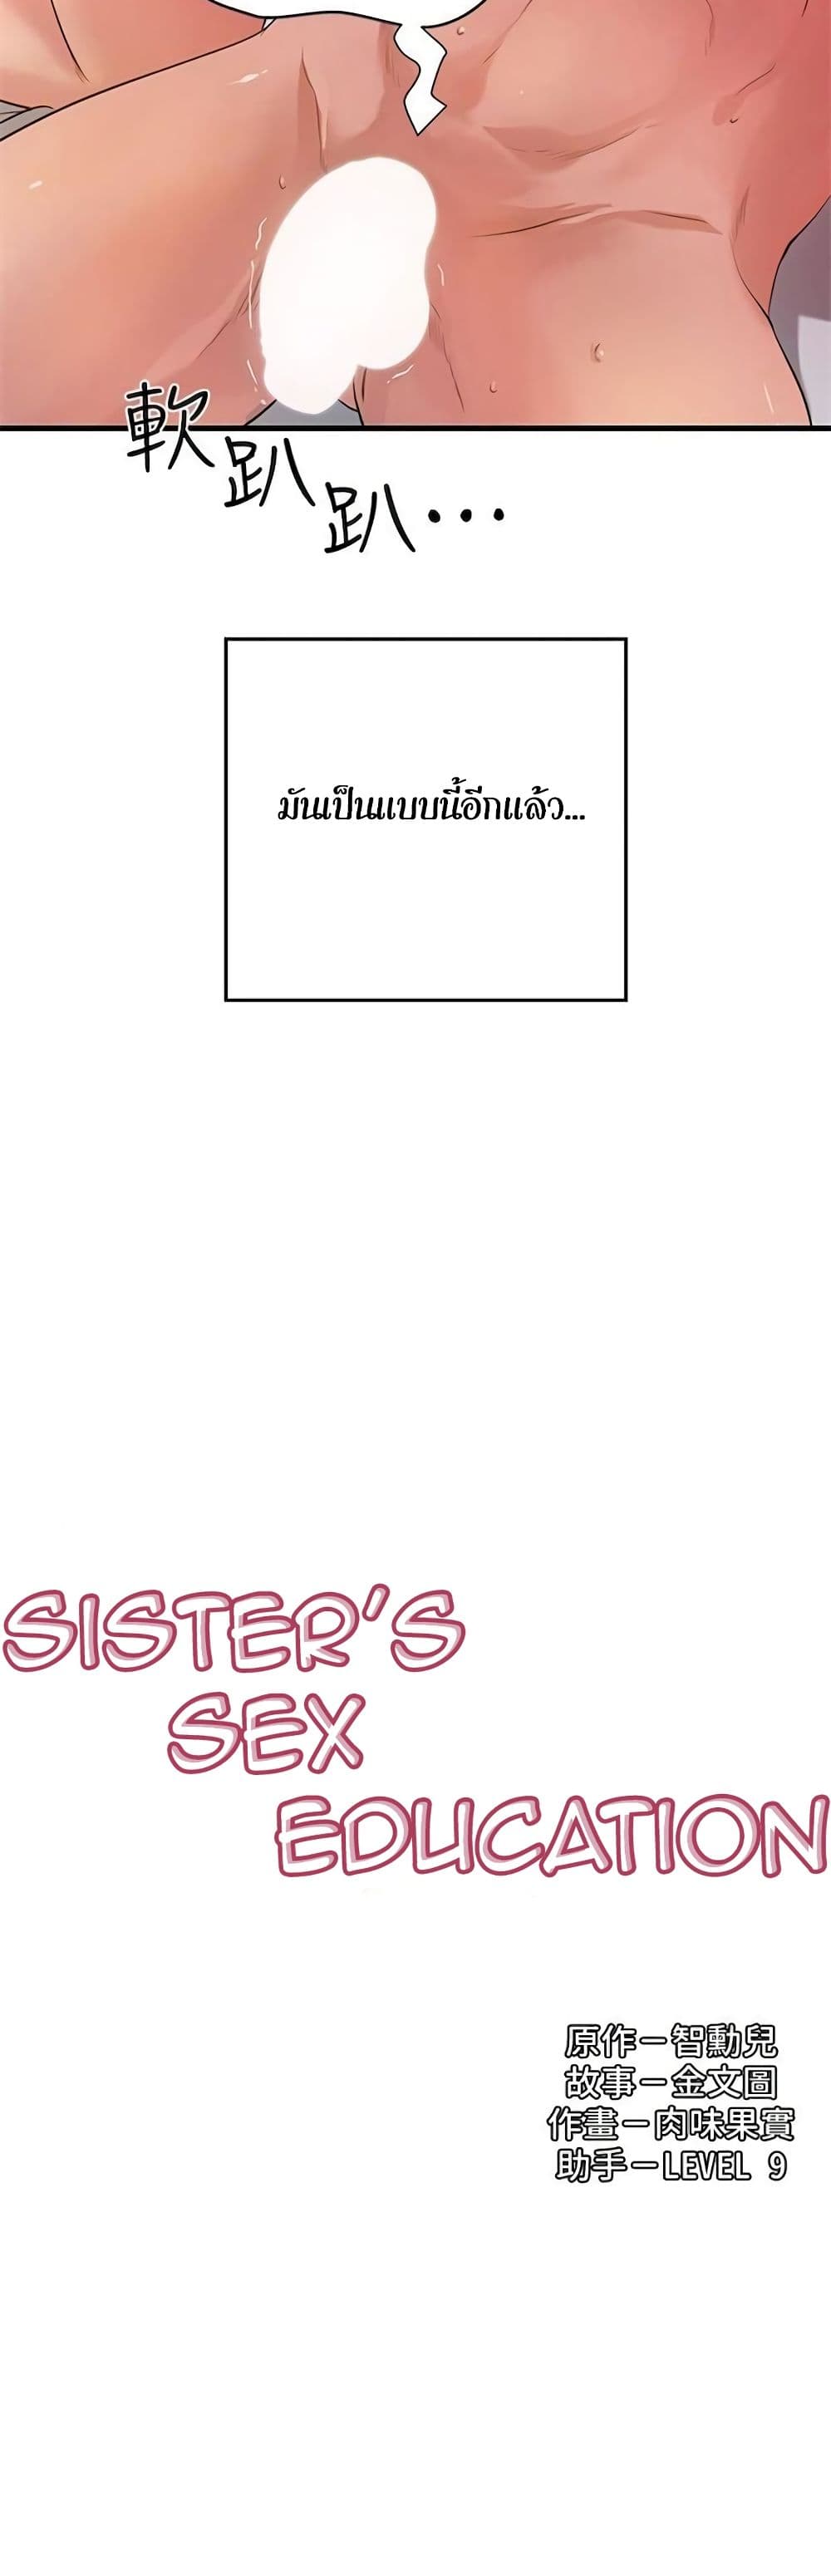 Sister’s Sex Education 1 (41)